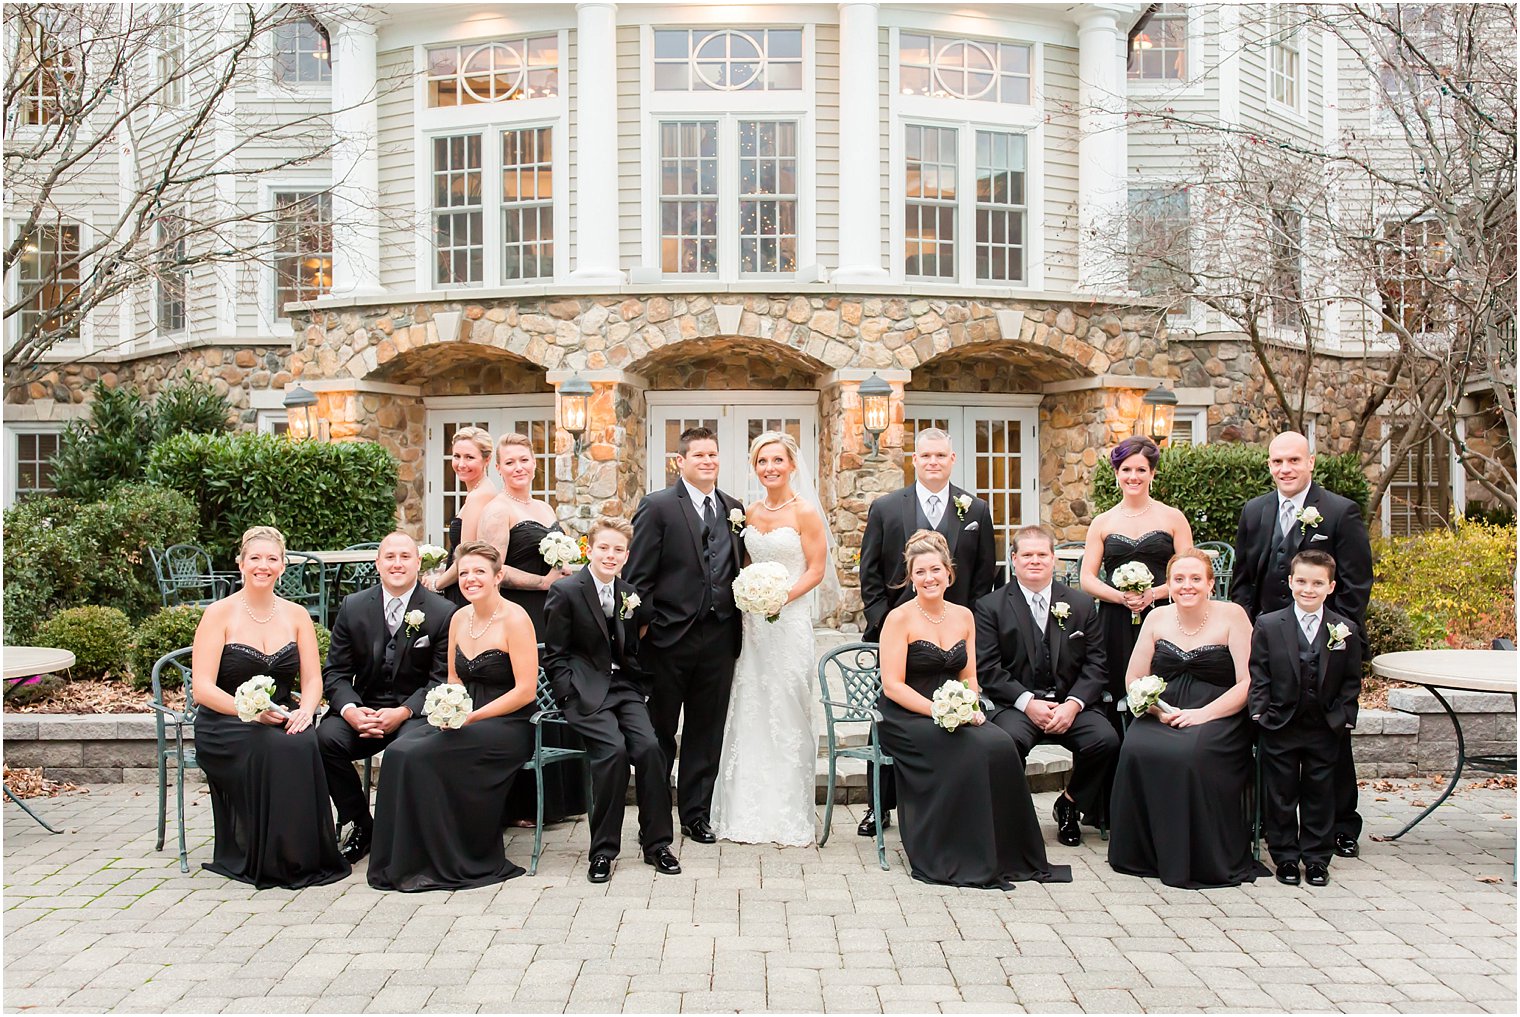 Classic winter wedding with black bridesmaids dresses